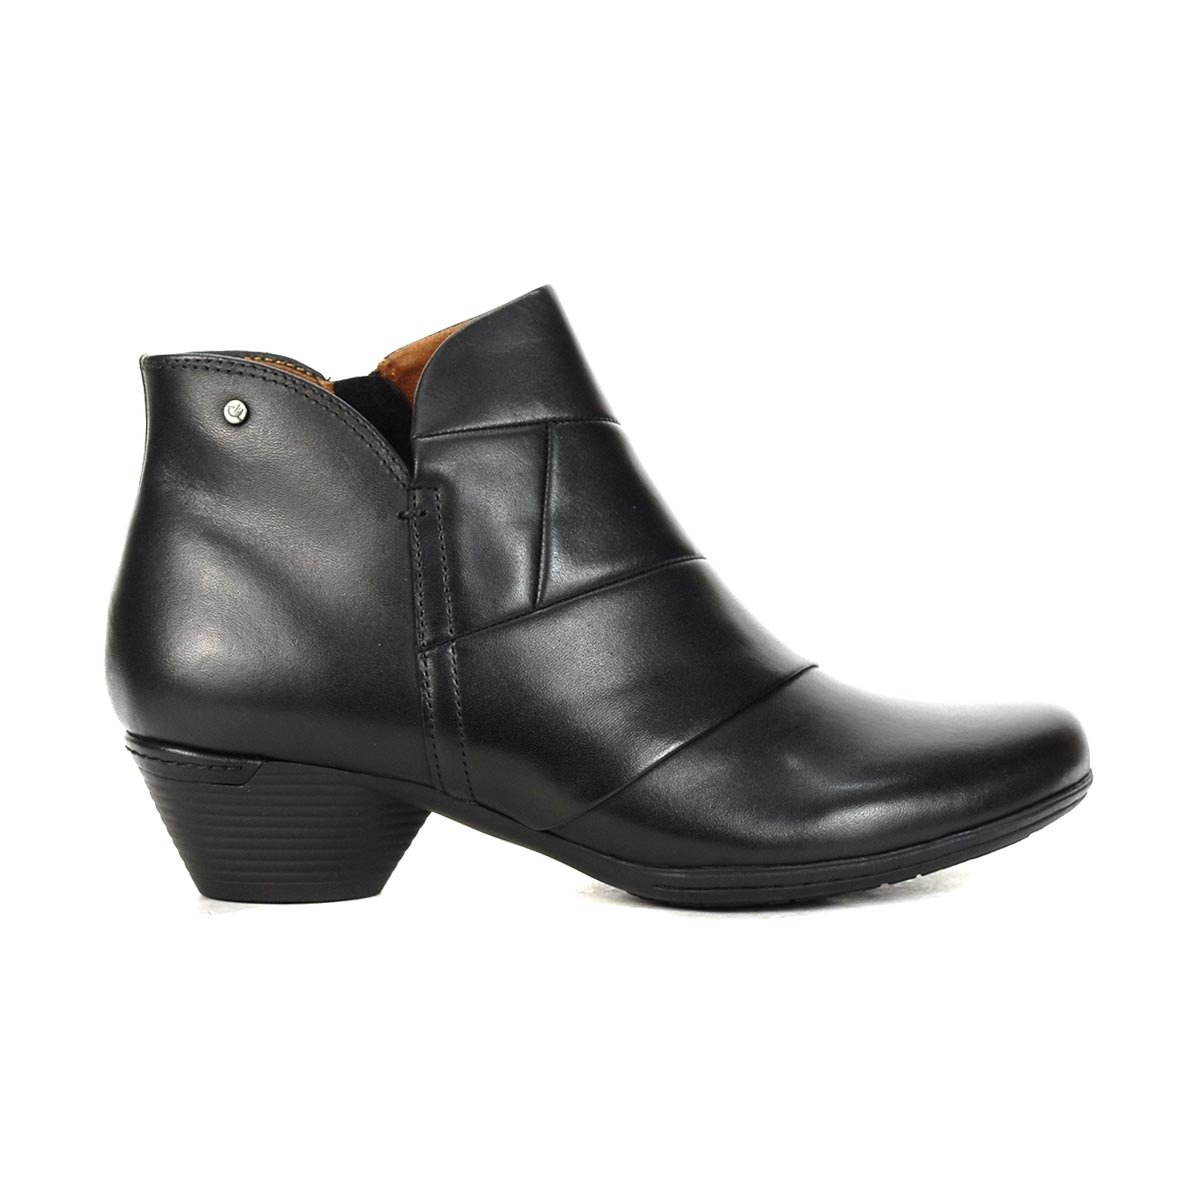 Cobb Hill Women's Laurel New Bootie Black leather Ankle Boots CJ2626